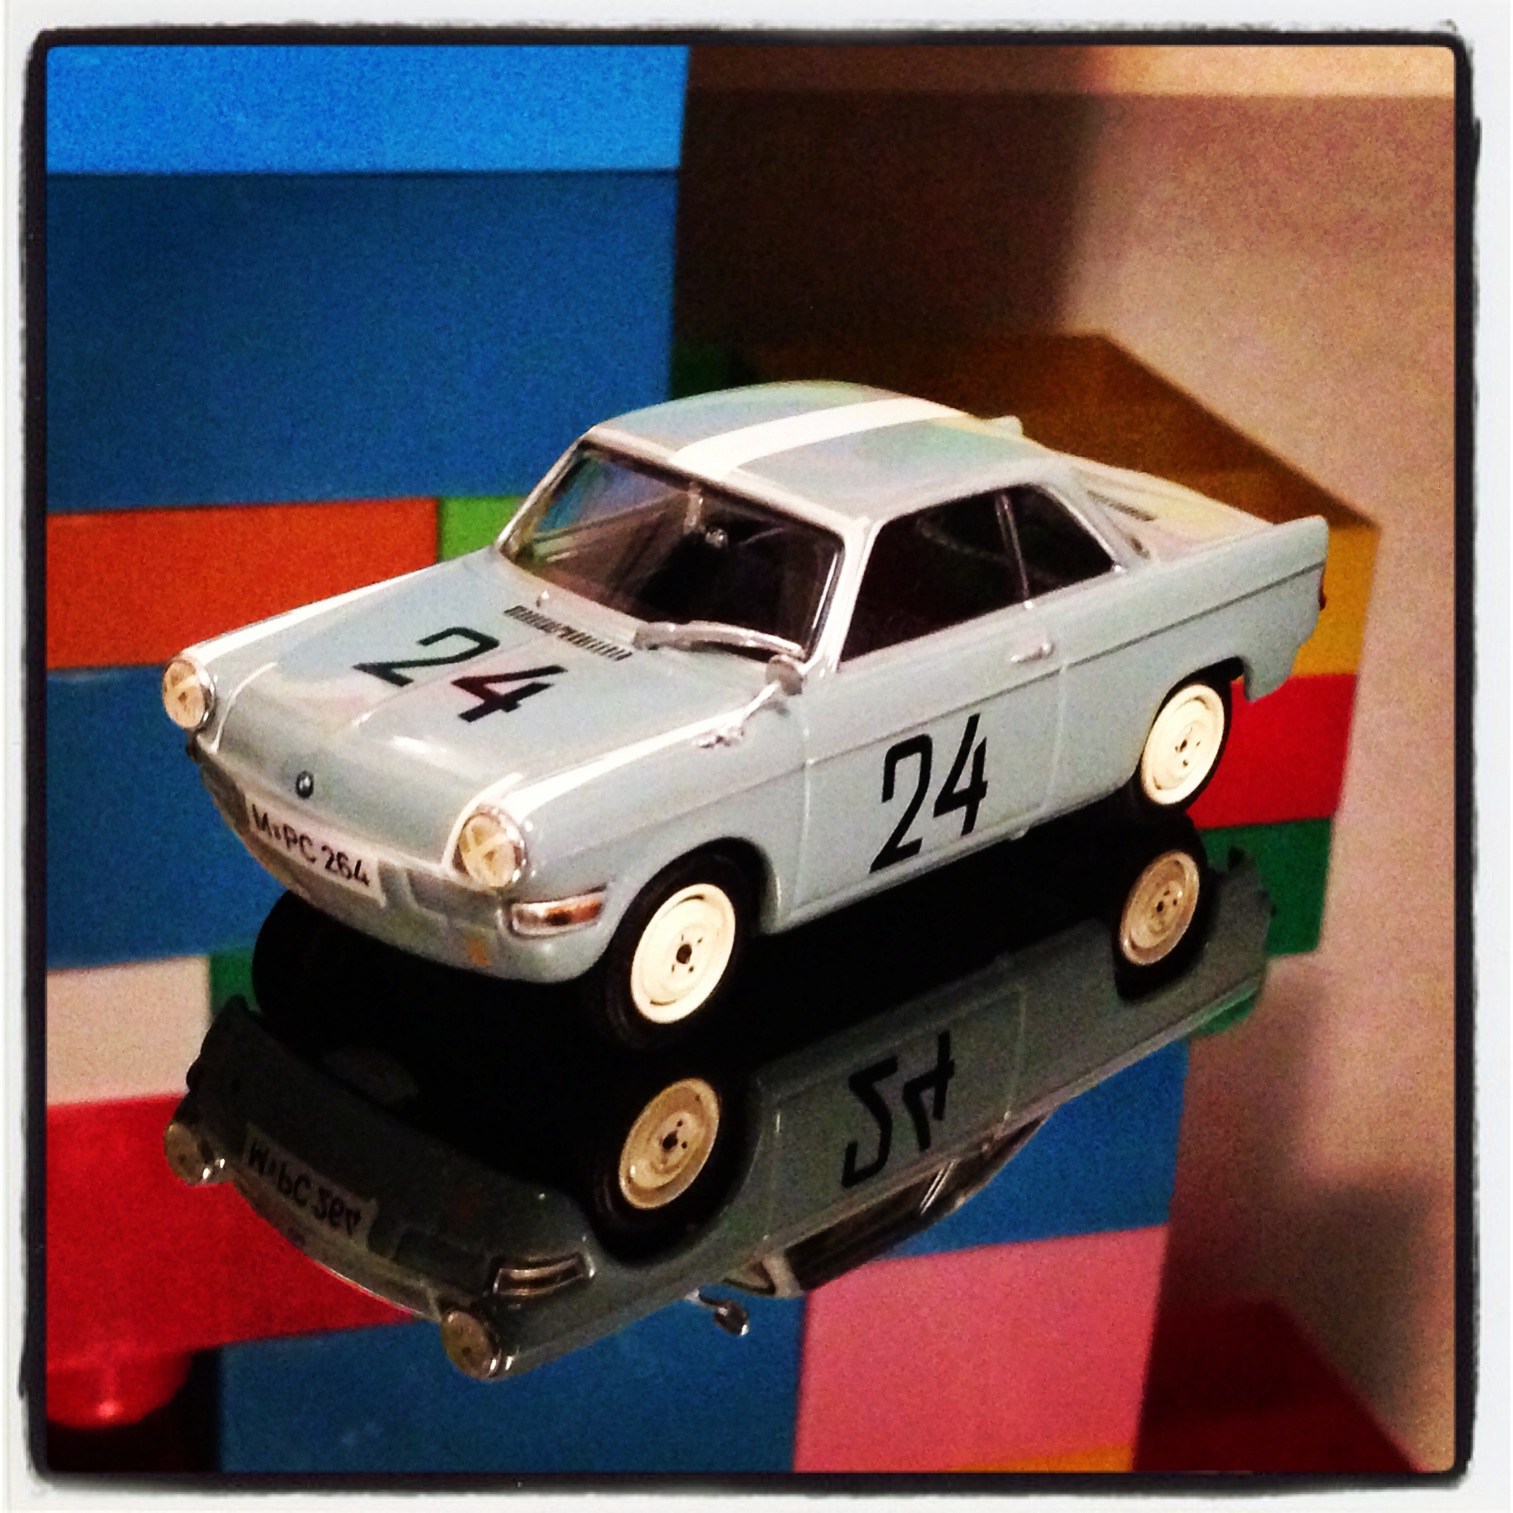 BMW 700 sport, 12h Hockenheim 1960 winners, #24 Stuck/Greger, le 1 of  500pcs. (minichamps)